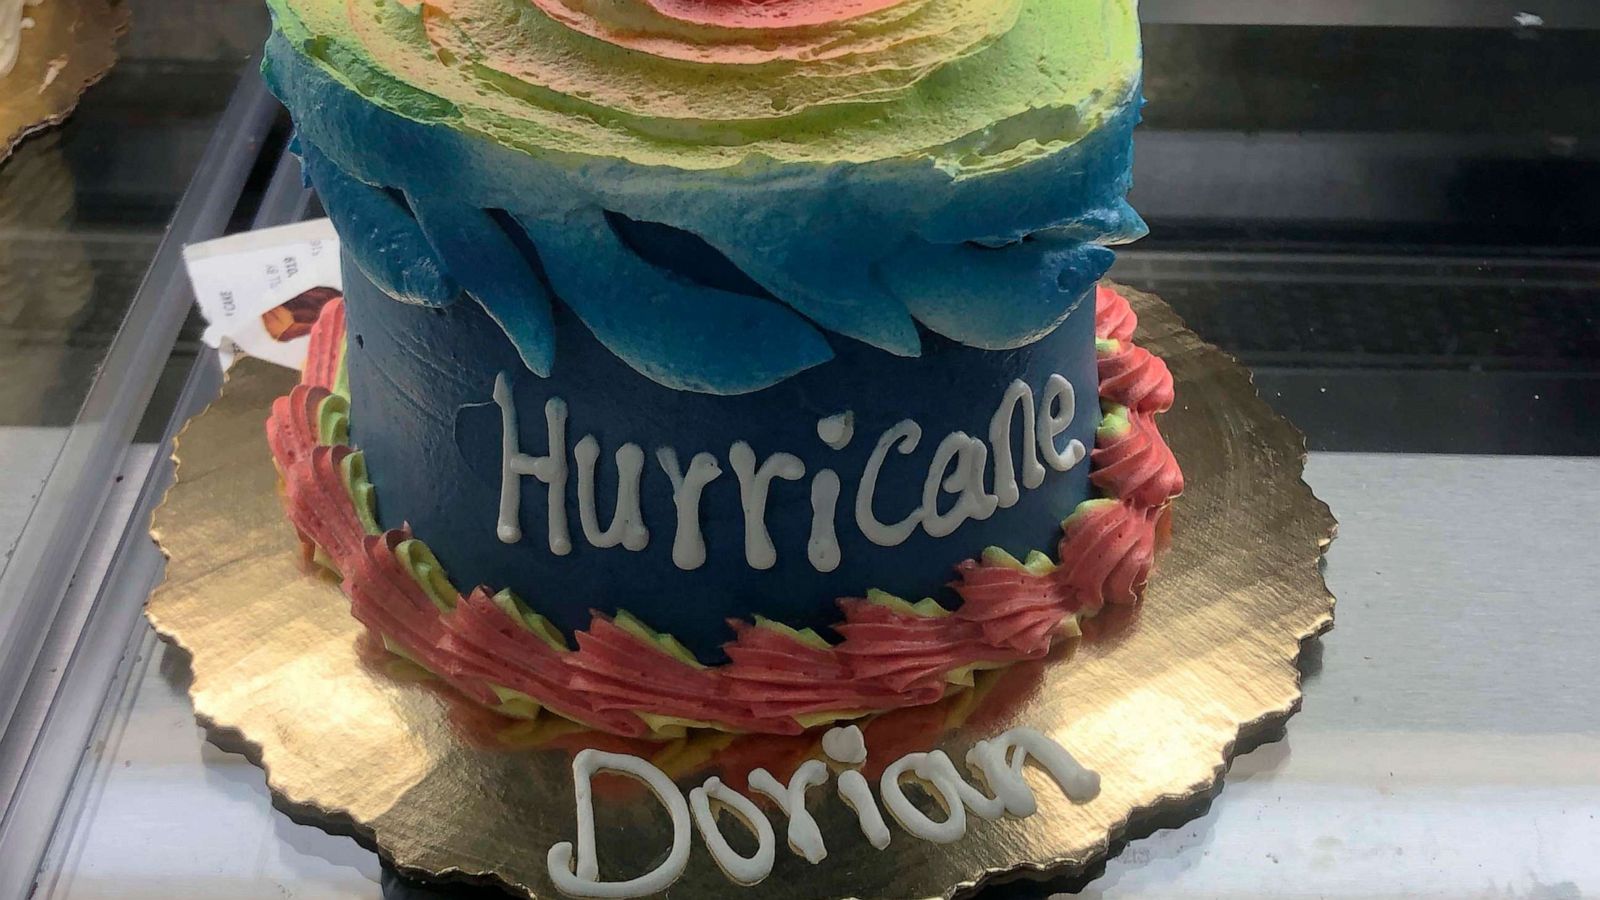 Storm passes as Publix discontinues controversial hurricane cakes ...